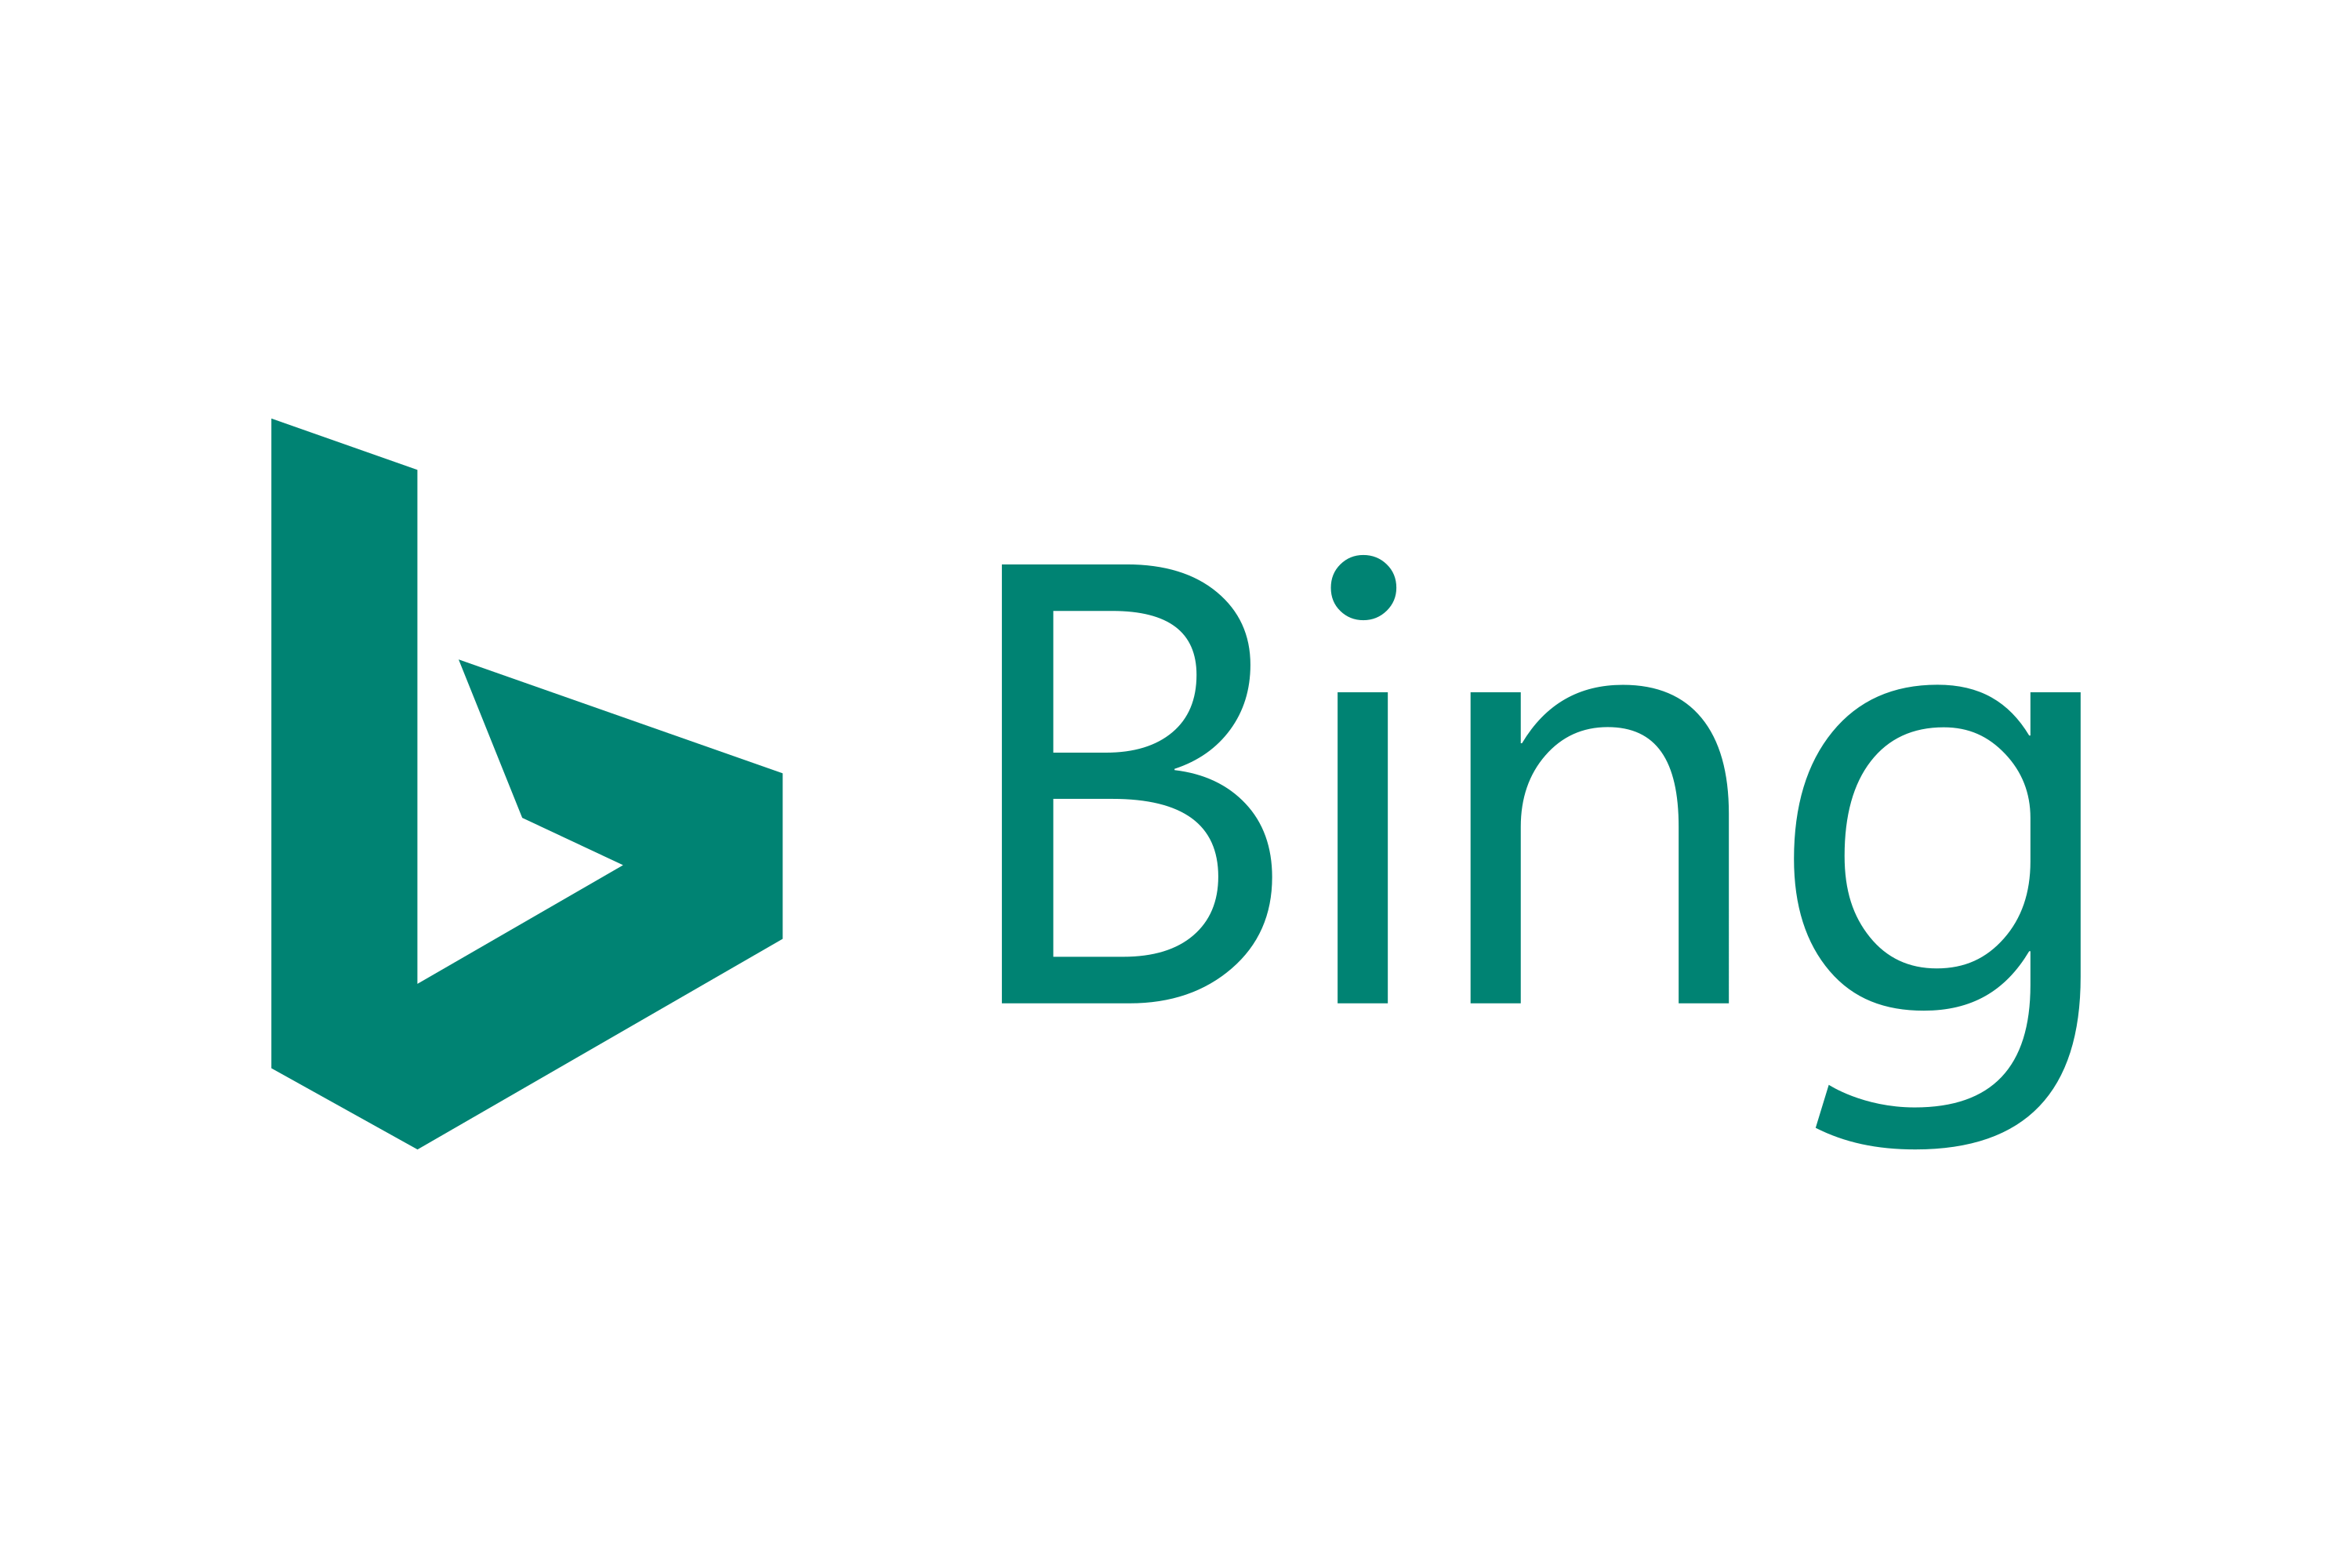 Bing ai image creator. Bing значок. Bing Поисковая система. Логотип поисковой системы бинг. Майкрософт бинг логотип.